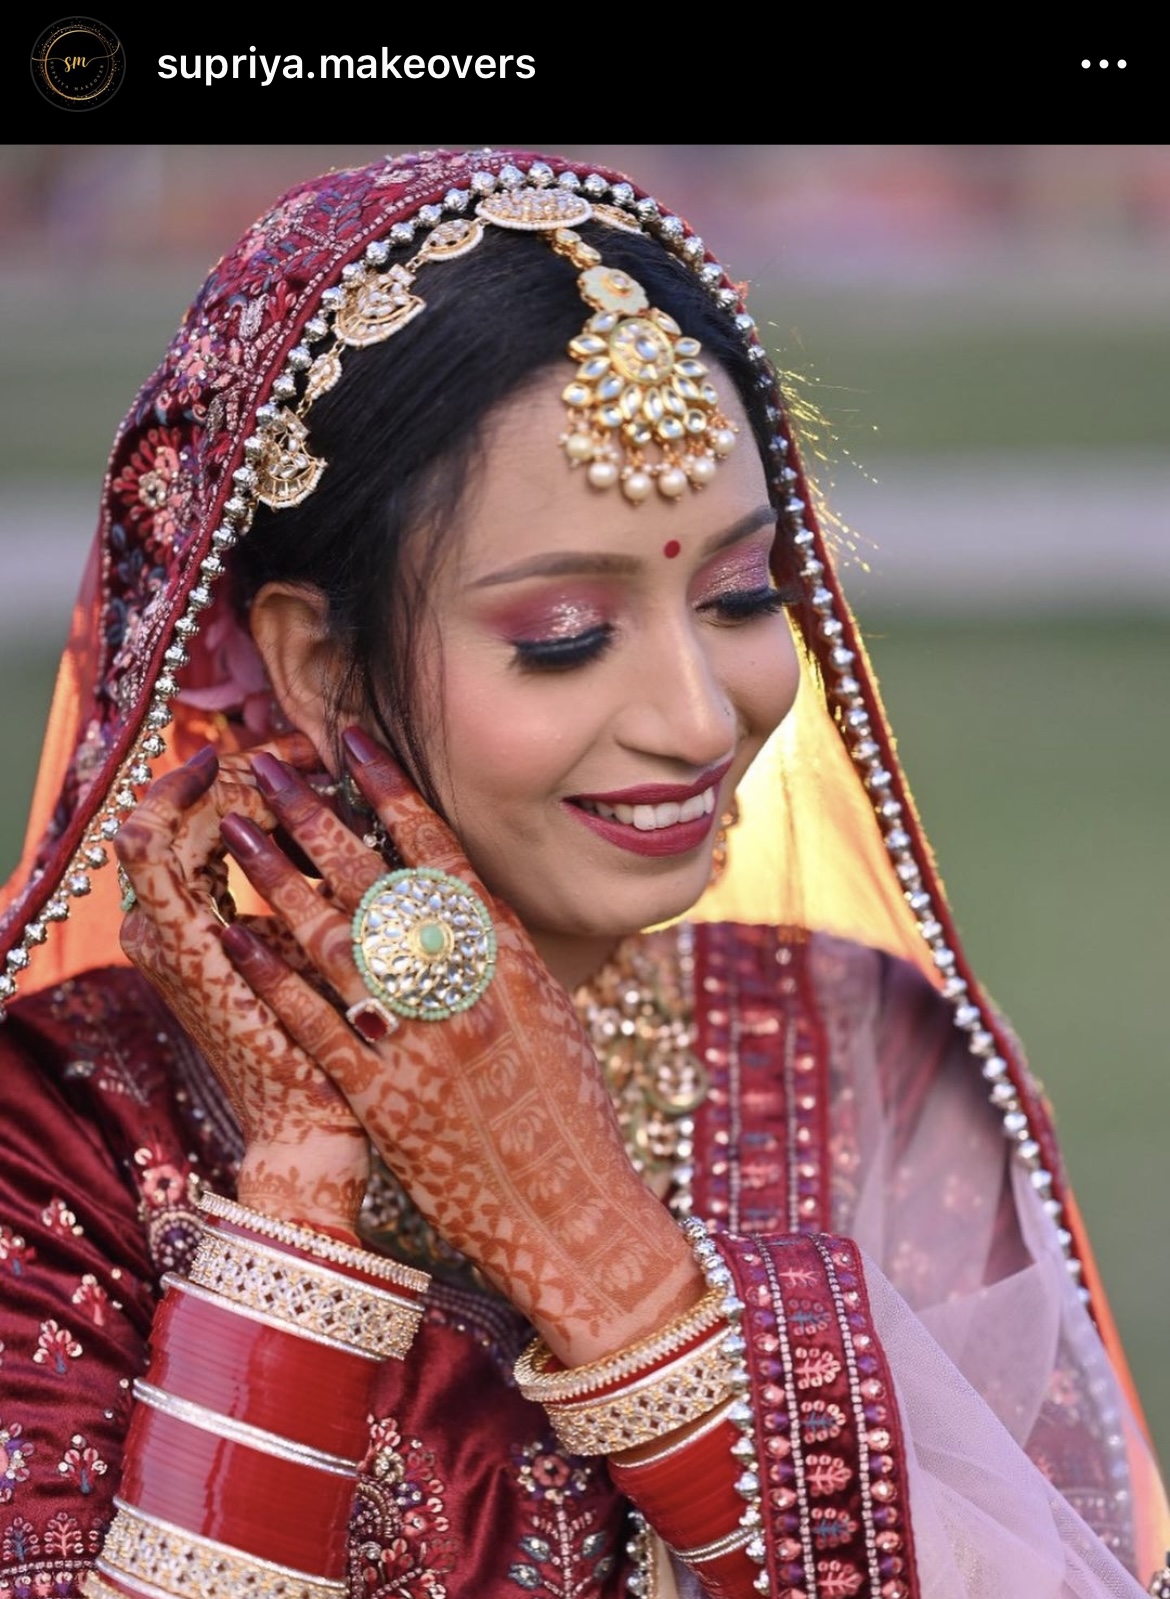 sejal-saini-makeup-artist-chandigarh